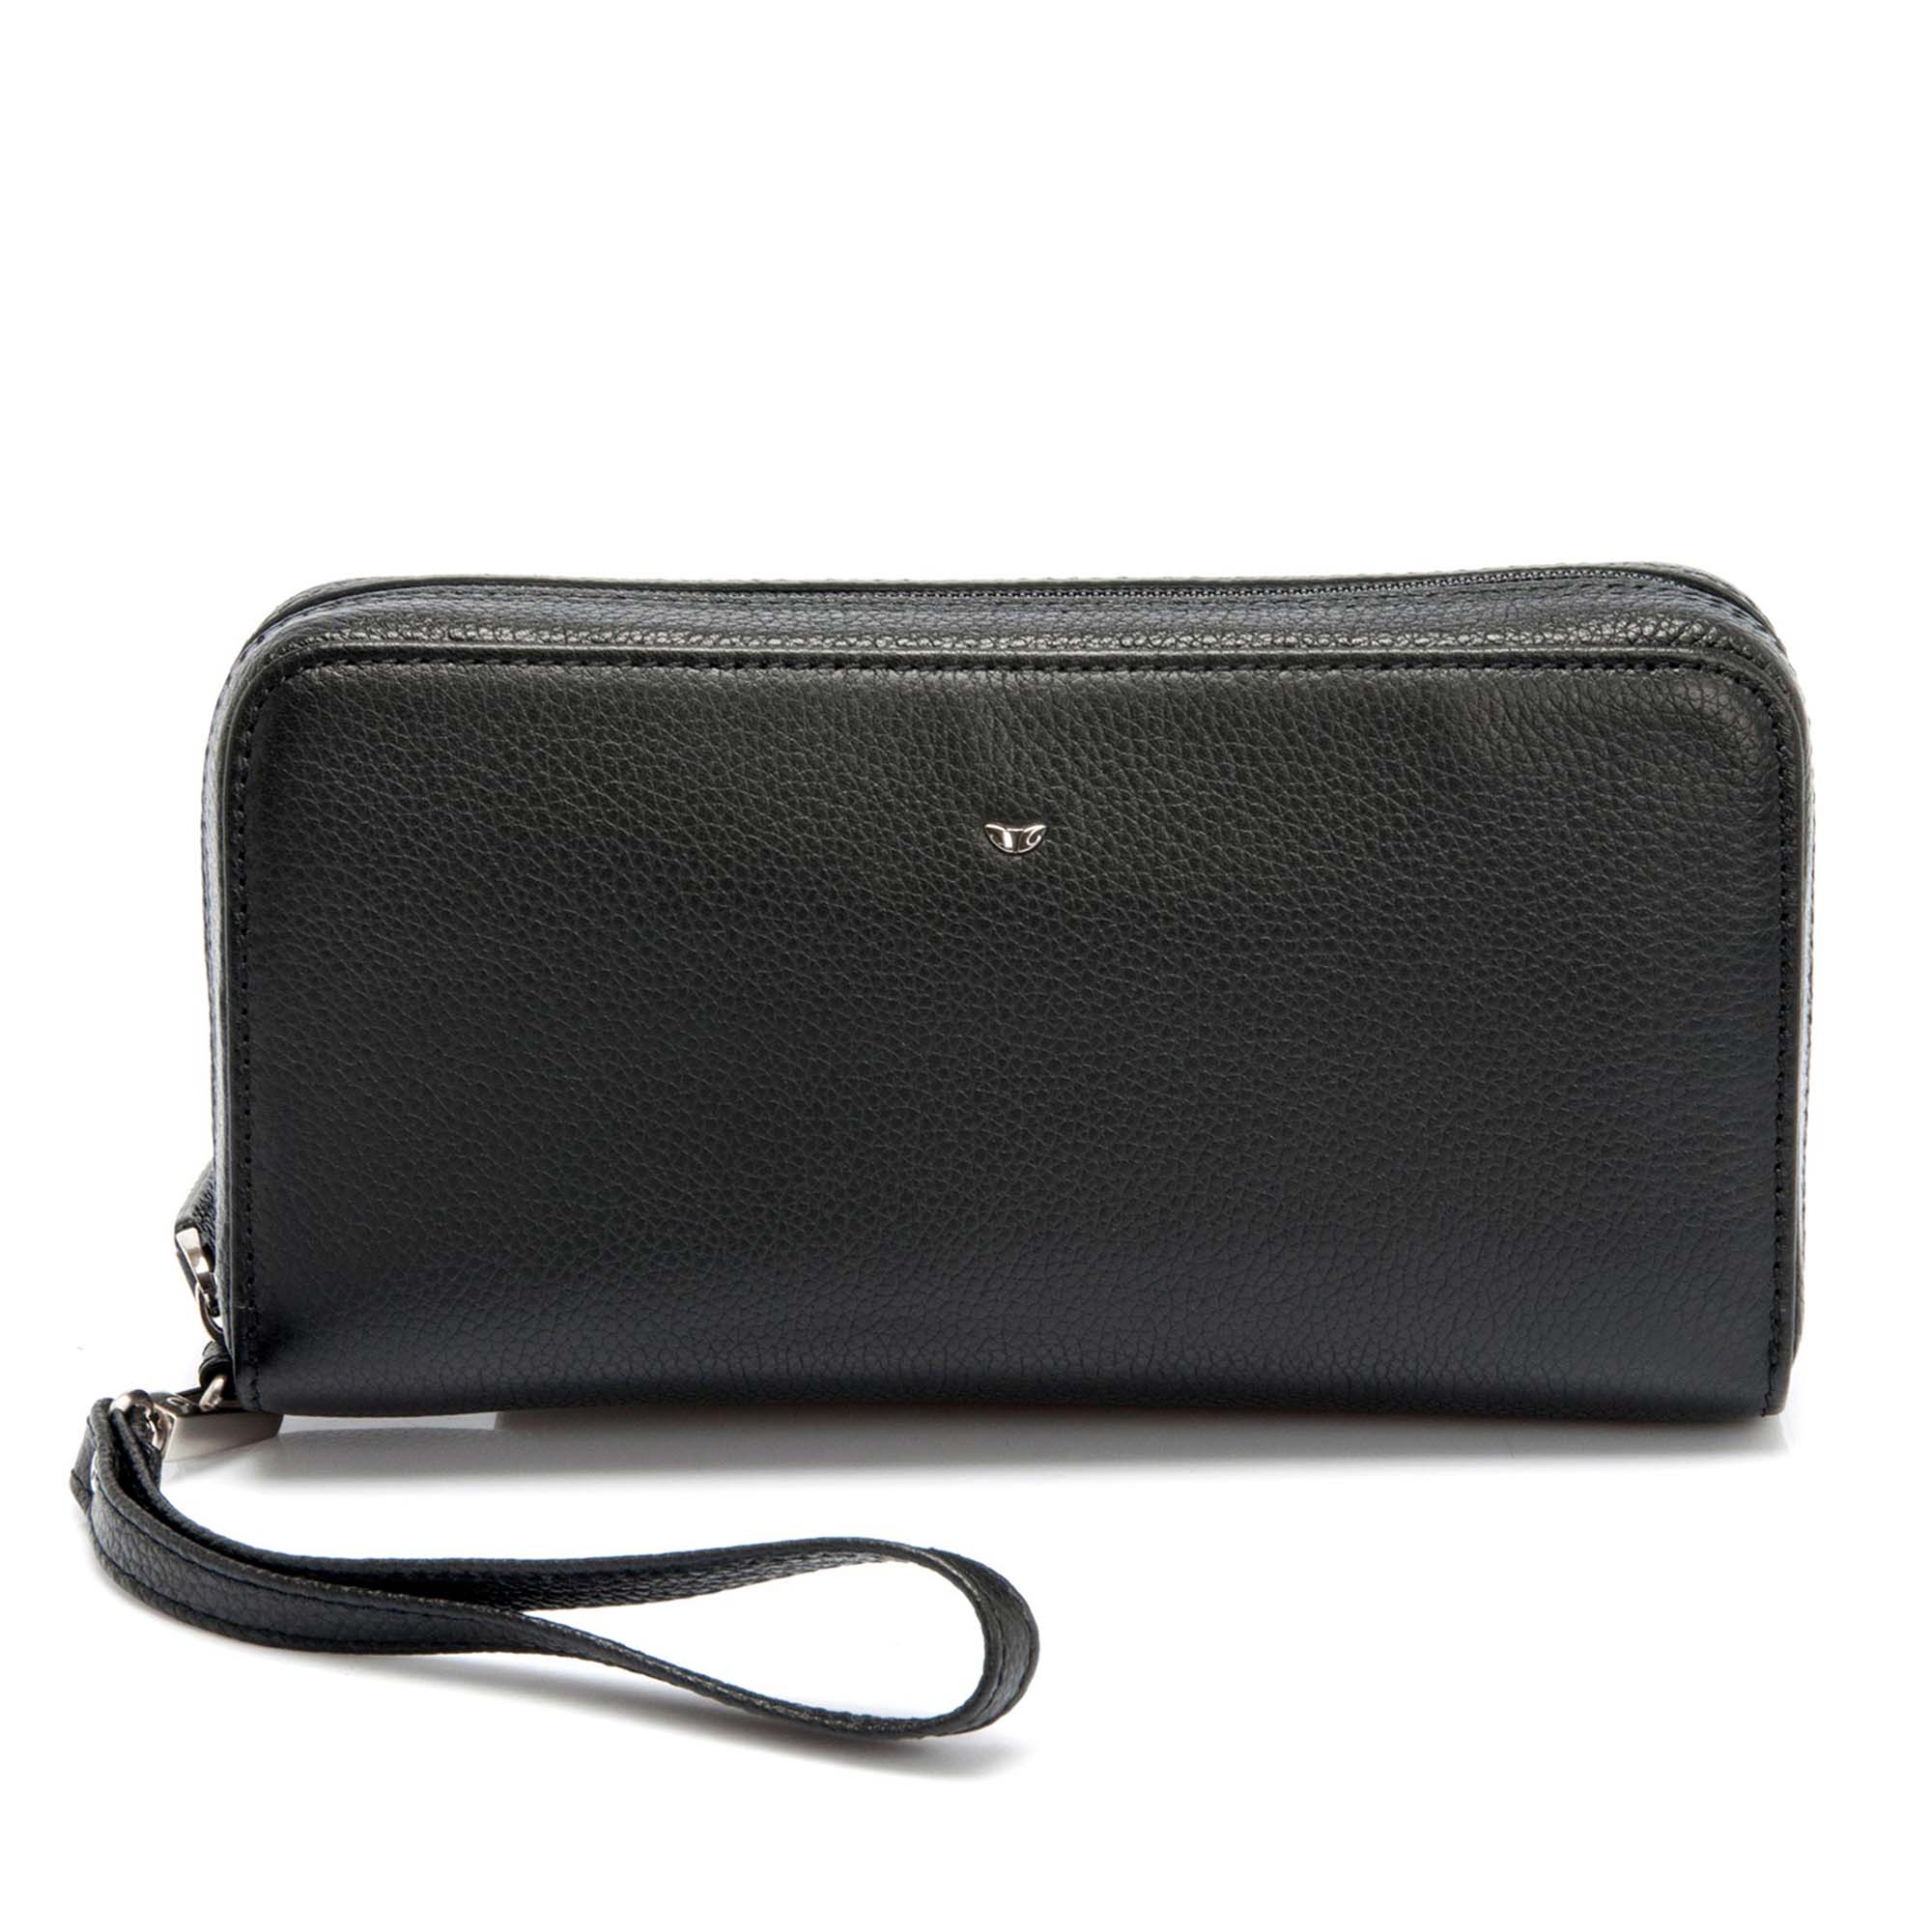 balmanent genuine leather clutch bag multi-color| Alibaba.com